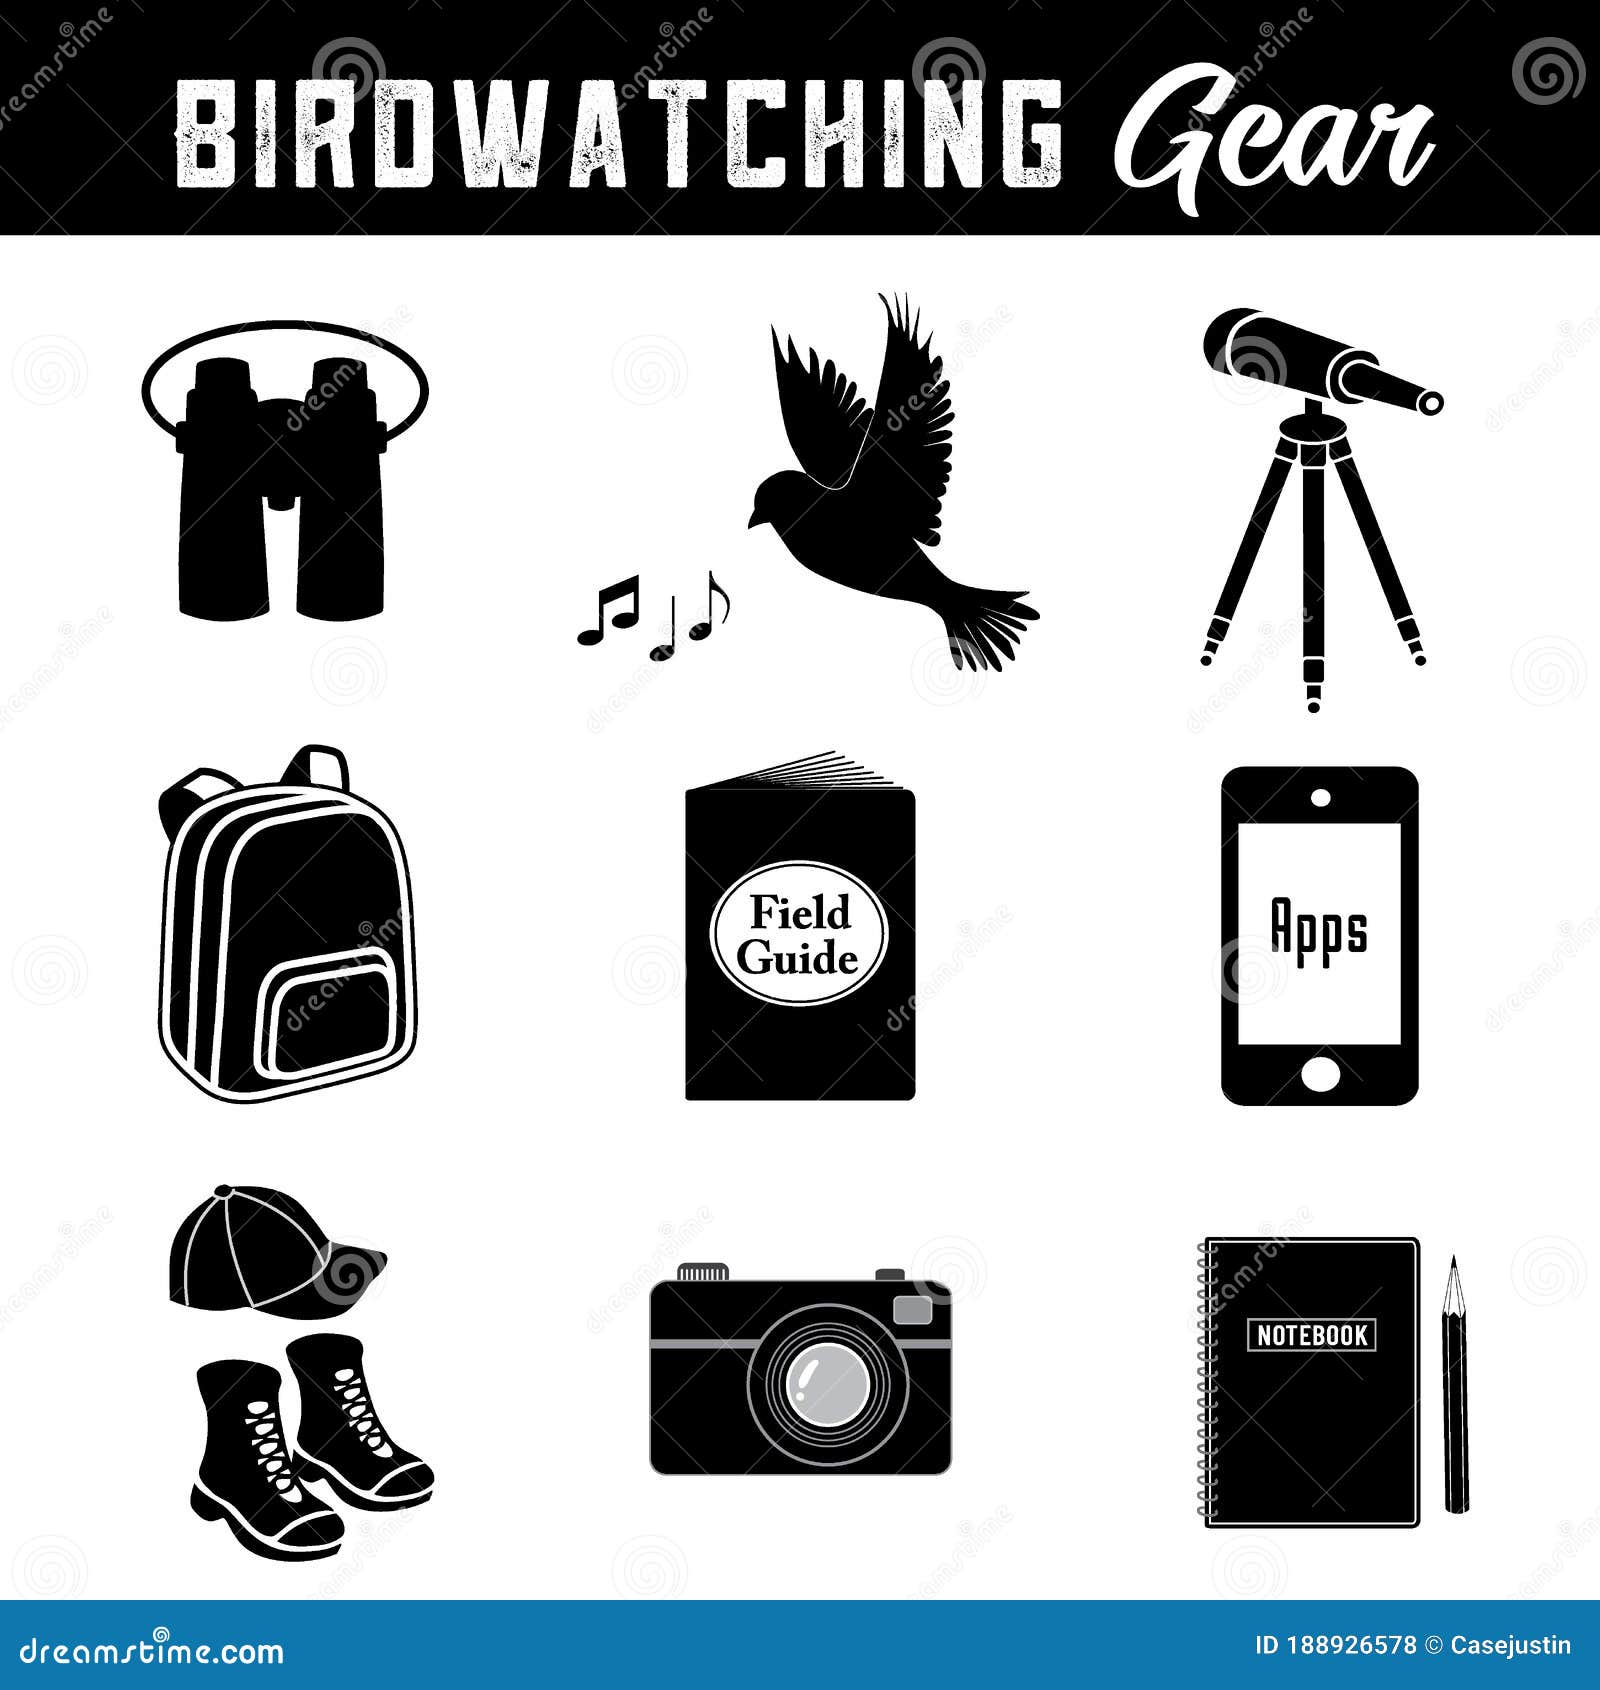 birdwatching gear and equipment for the avid birder